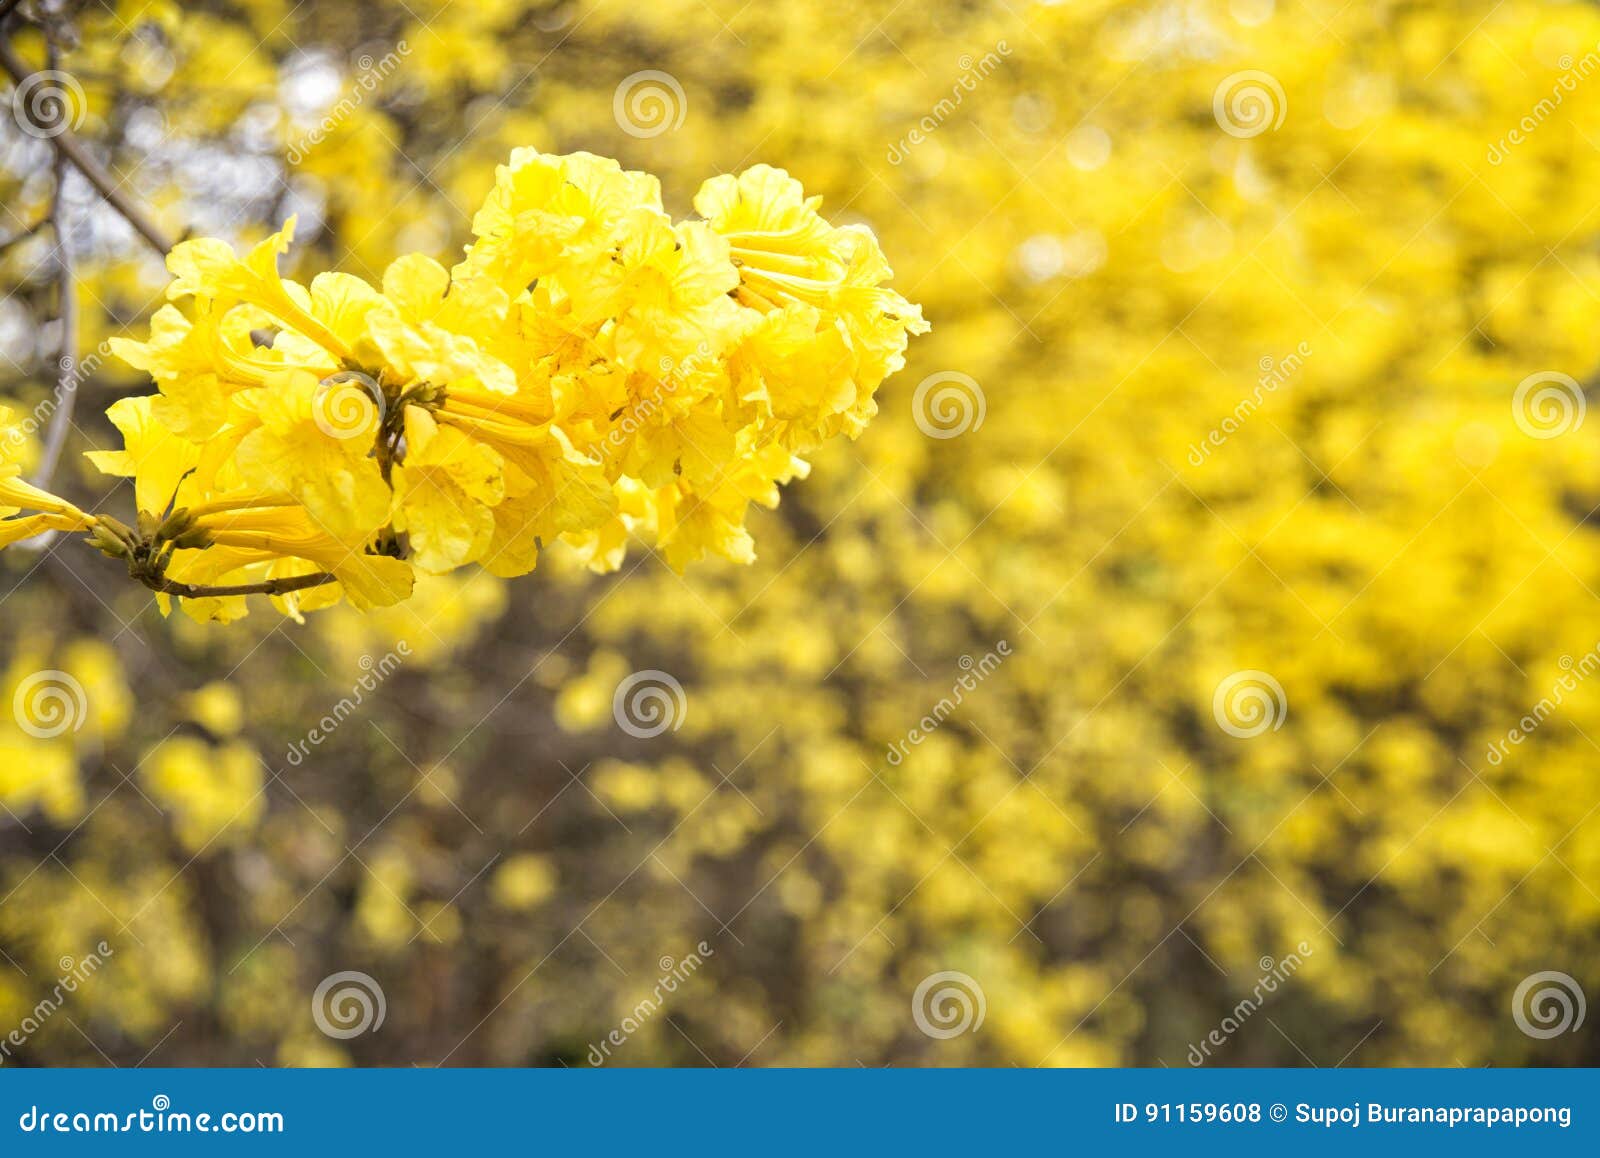 yellow flower, tabebuia chrysantha nichols,tallow pui,golden tre